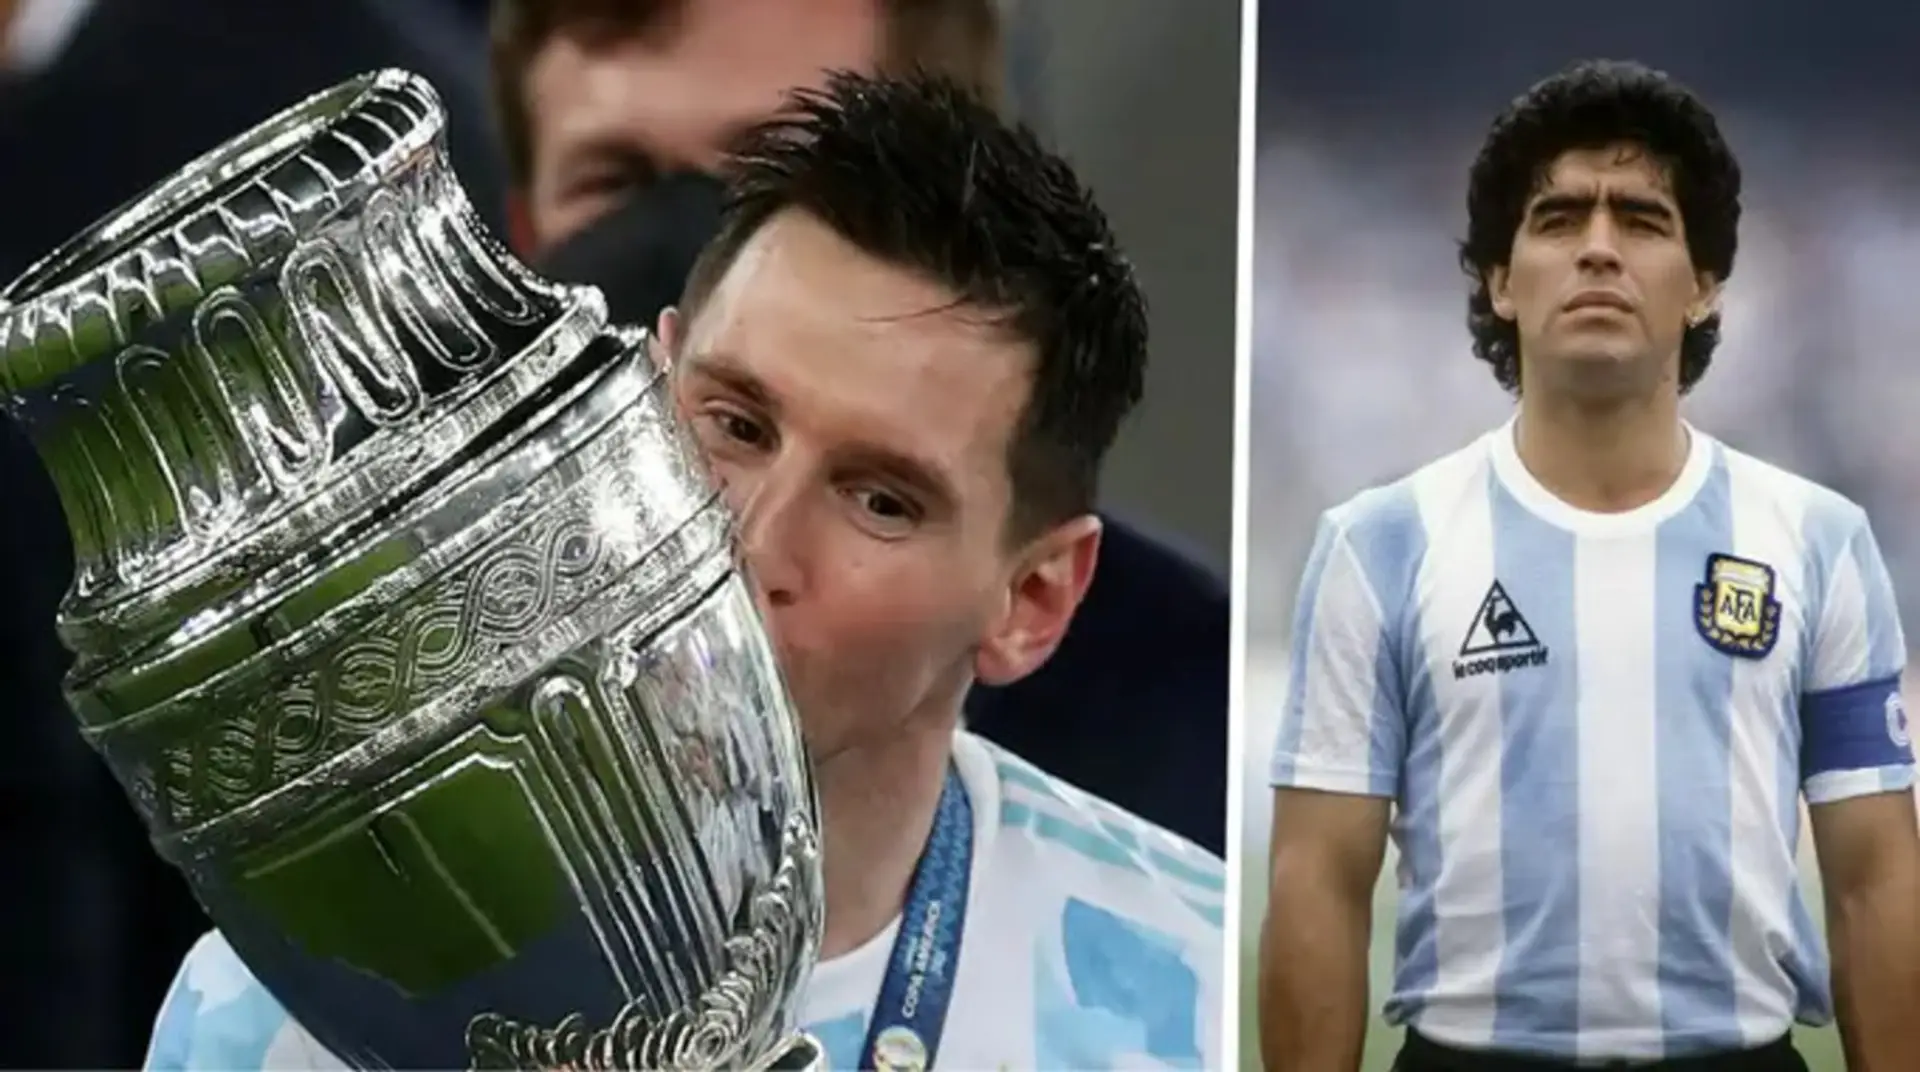 'Solo te recordaré de 1986': un fan usa el ejemplo de Maradona contra el hater de Messi